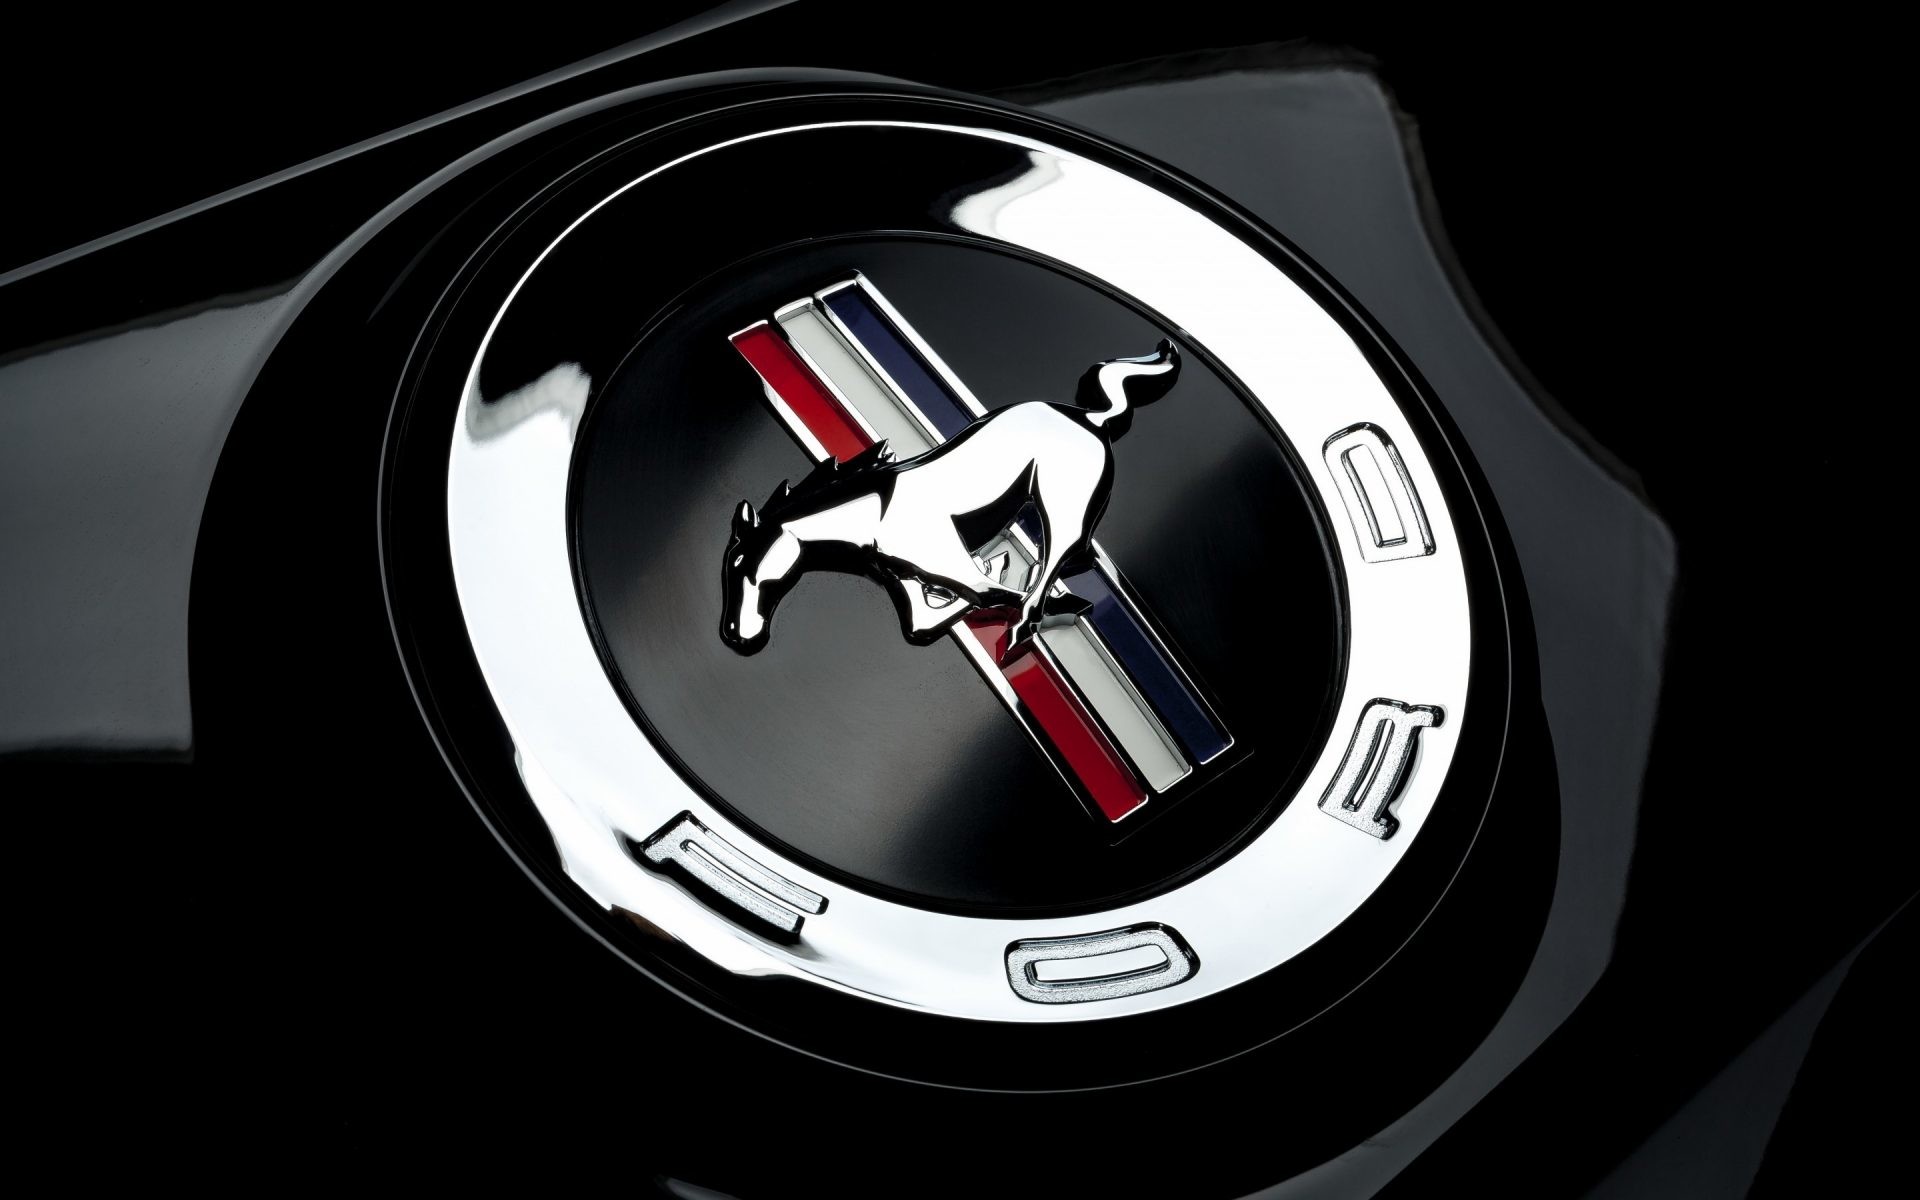 Ford Mustang Emblem 4k HD Wallpaper